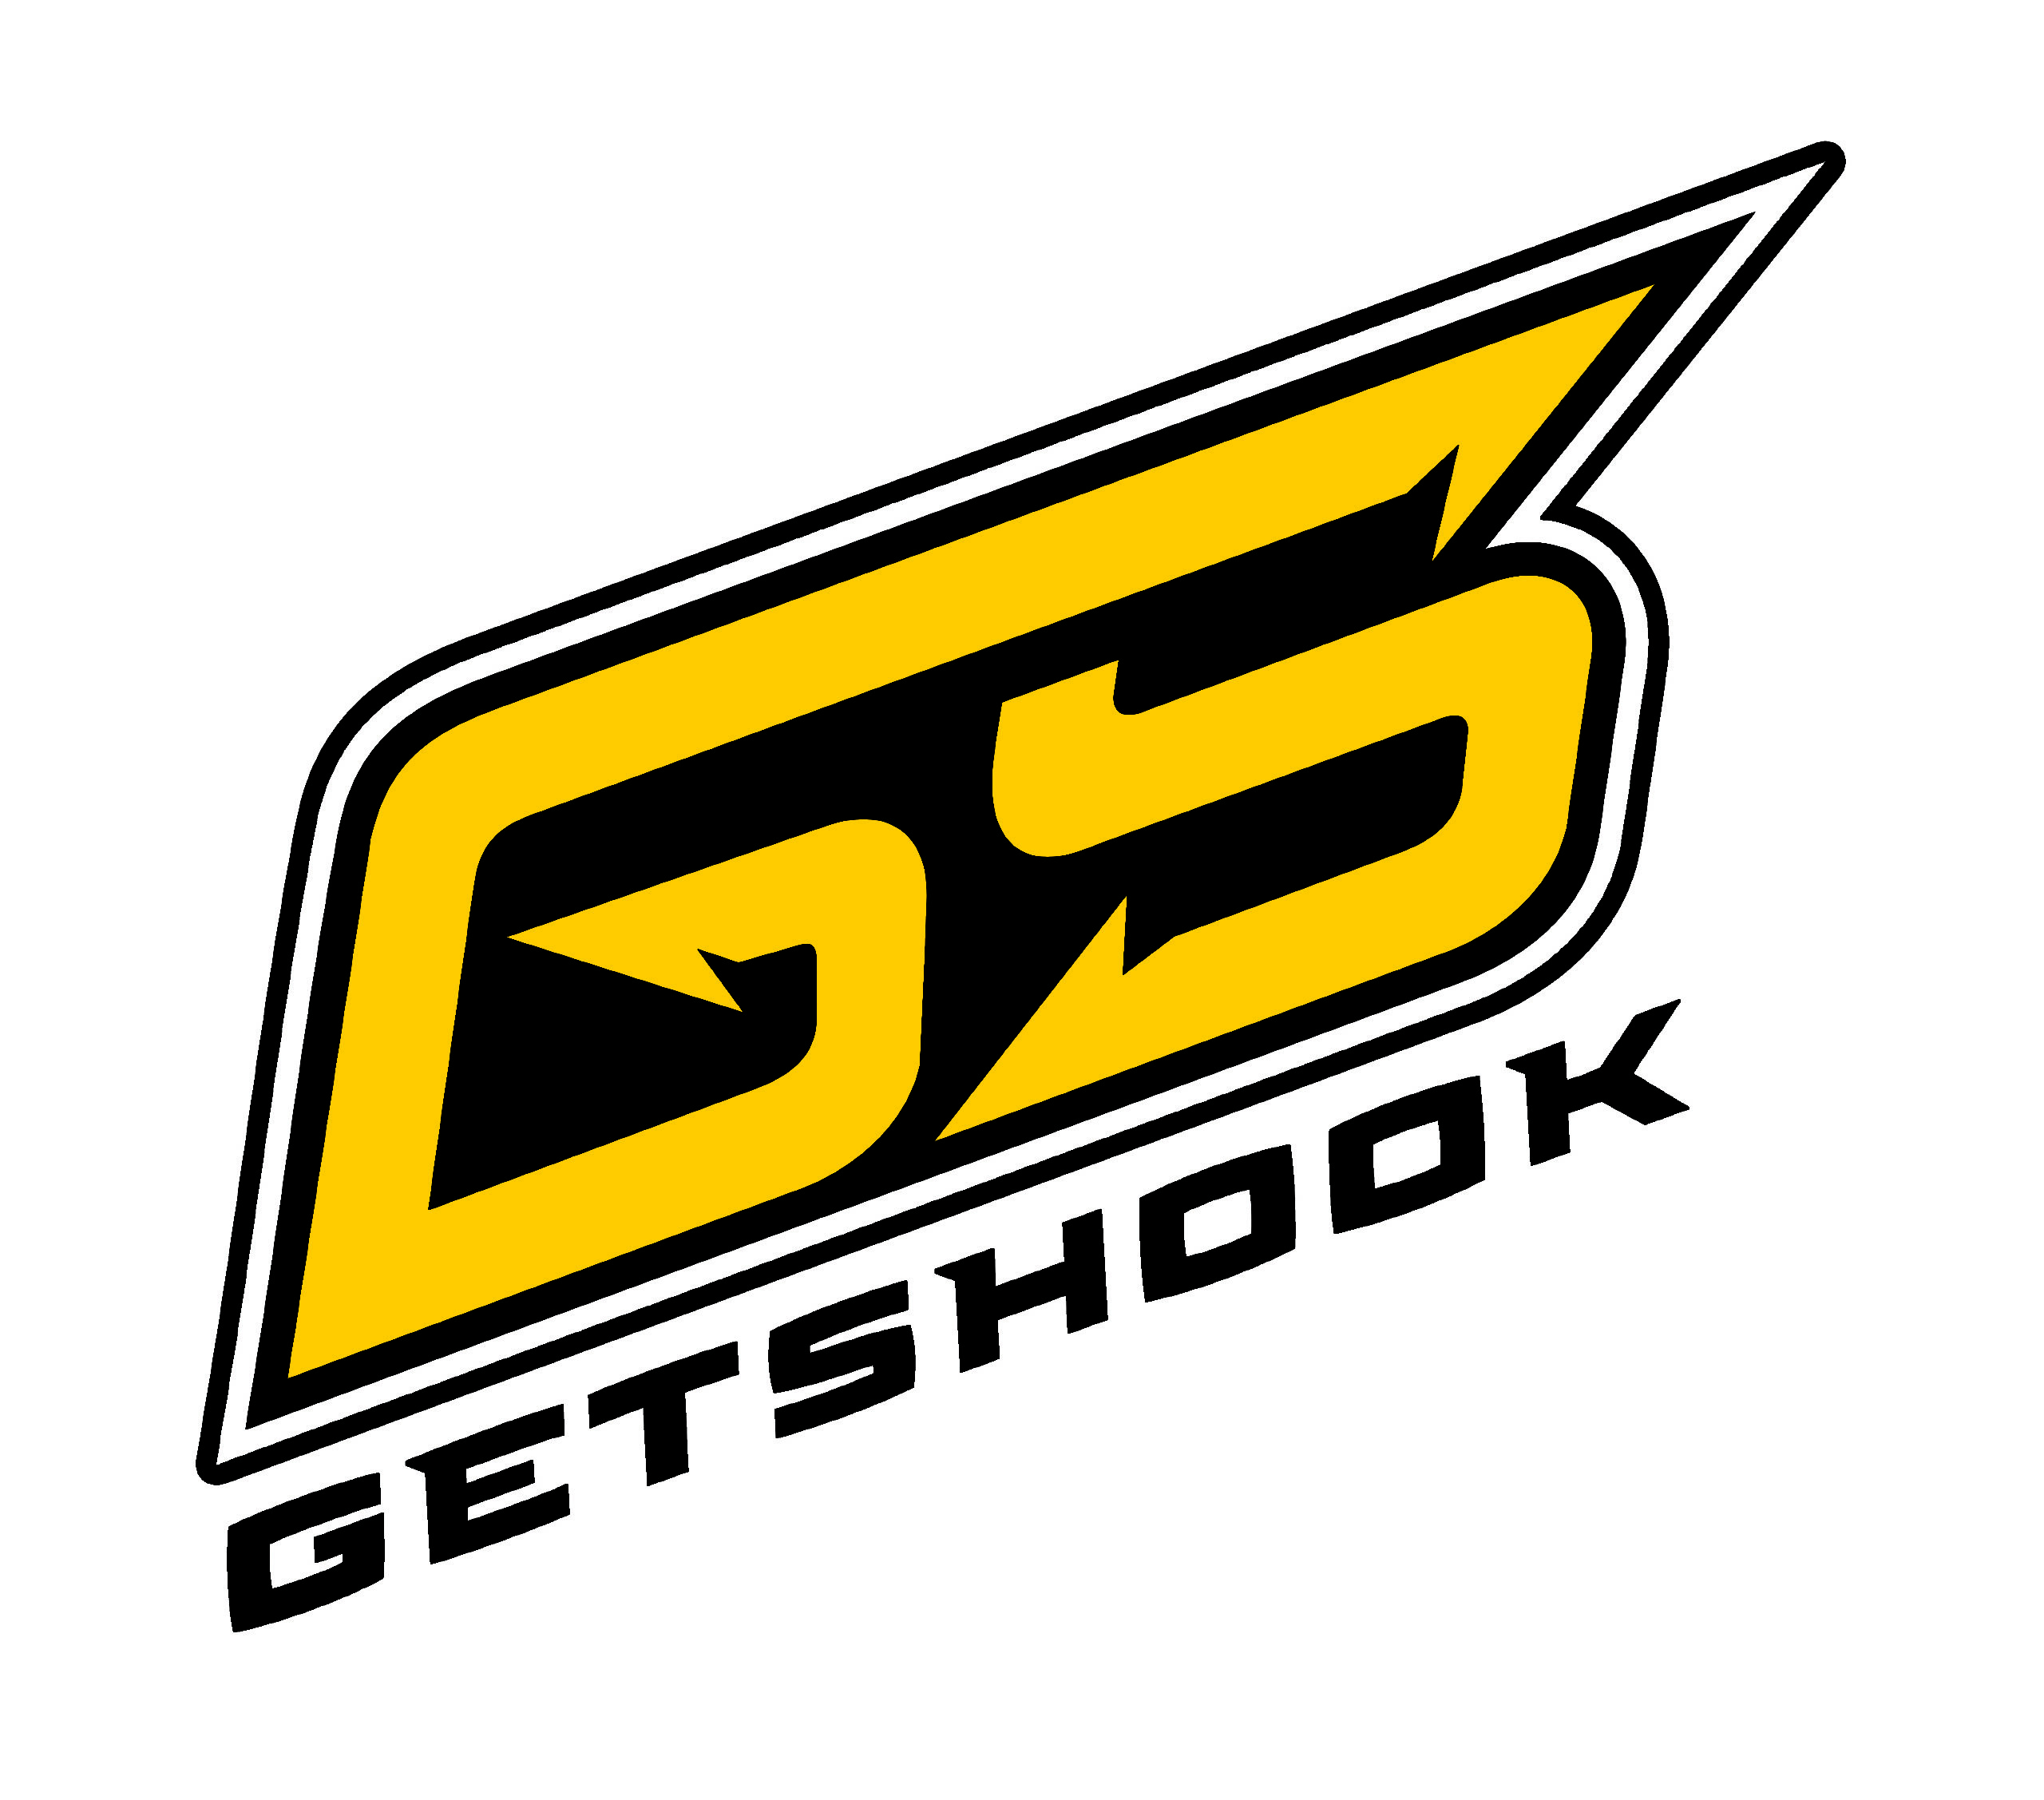 GetShookSports